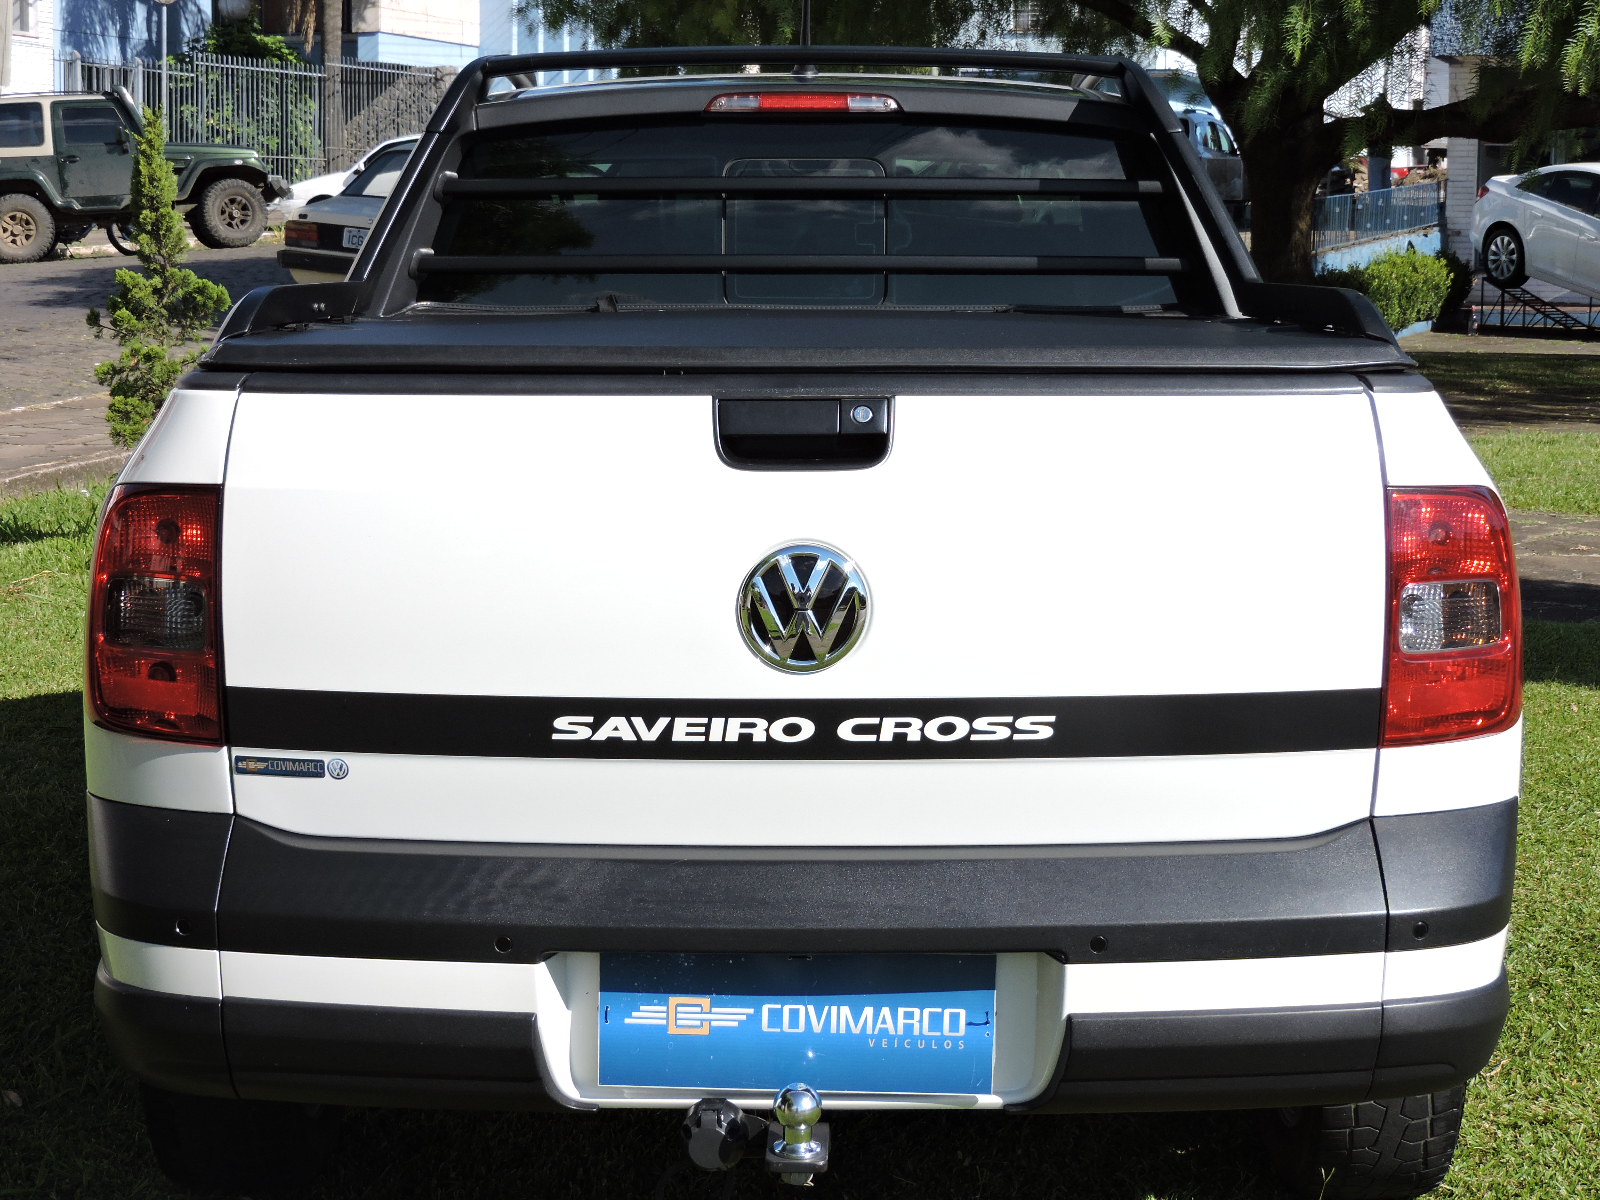 SAVEIRO CROSS CE – 2014 – Covimarco Veículos